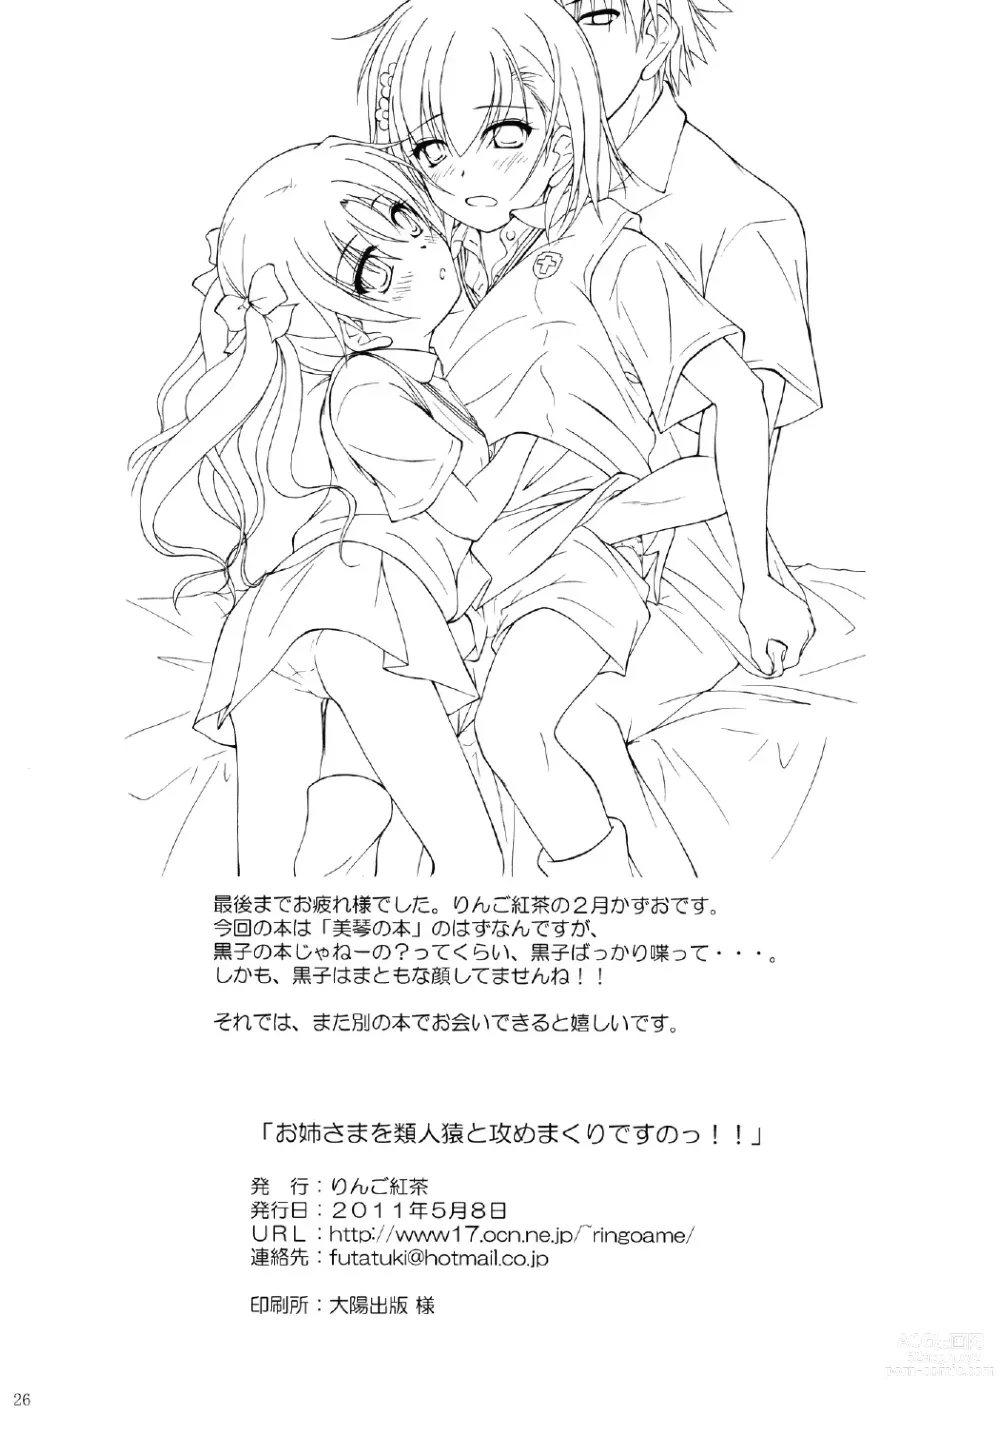 Page 26 of doujinshi Onee-sama o Ruijinen to Sememakuri desu no!!